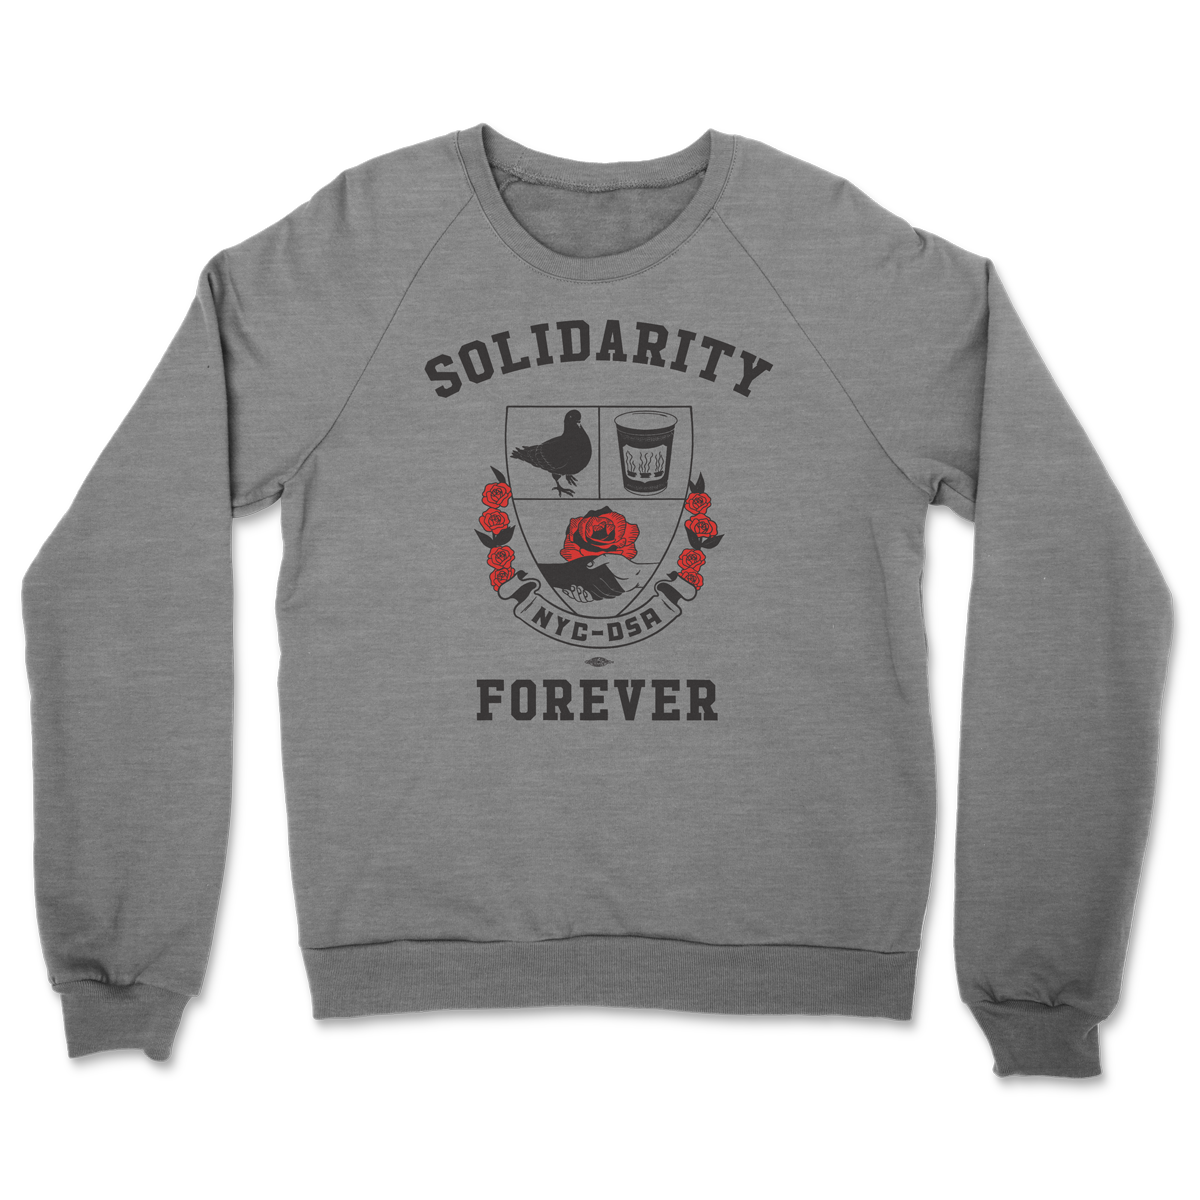 Solidarity Forever Sweatshirt